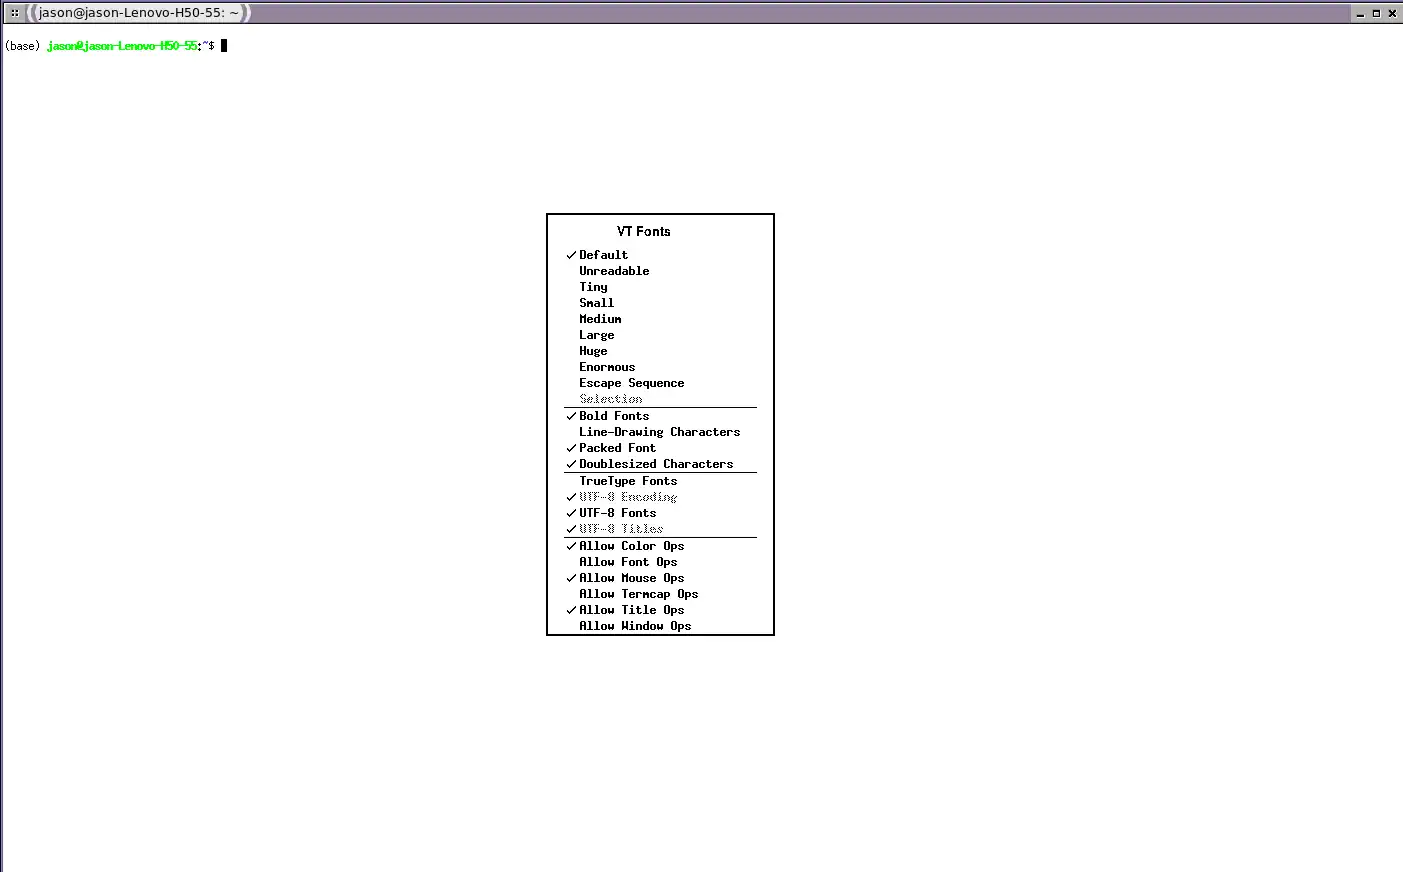 An Xterm window with the VT Fonts menu open.